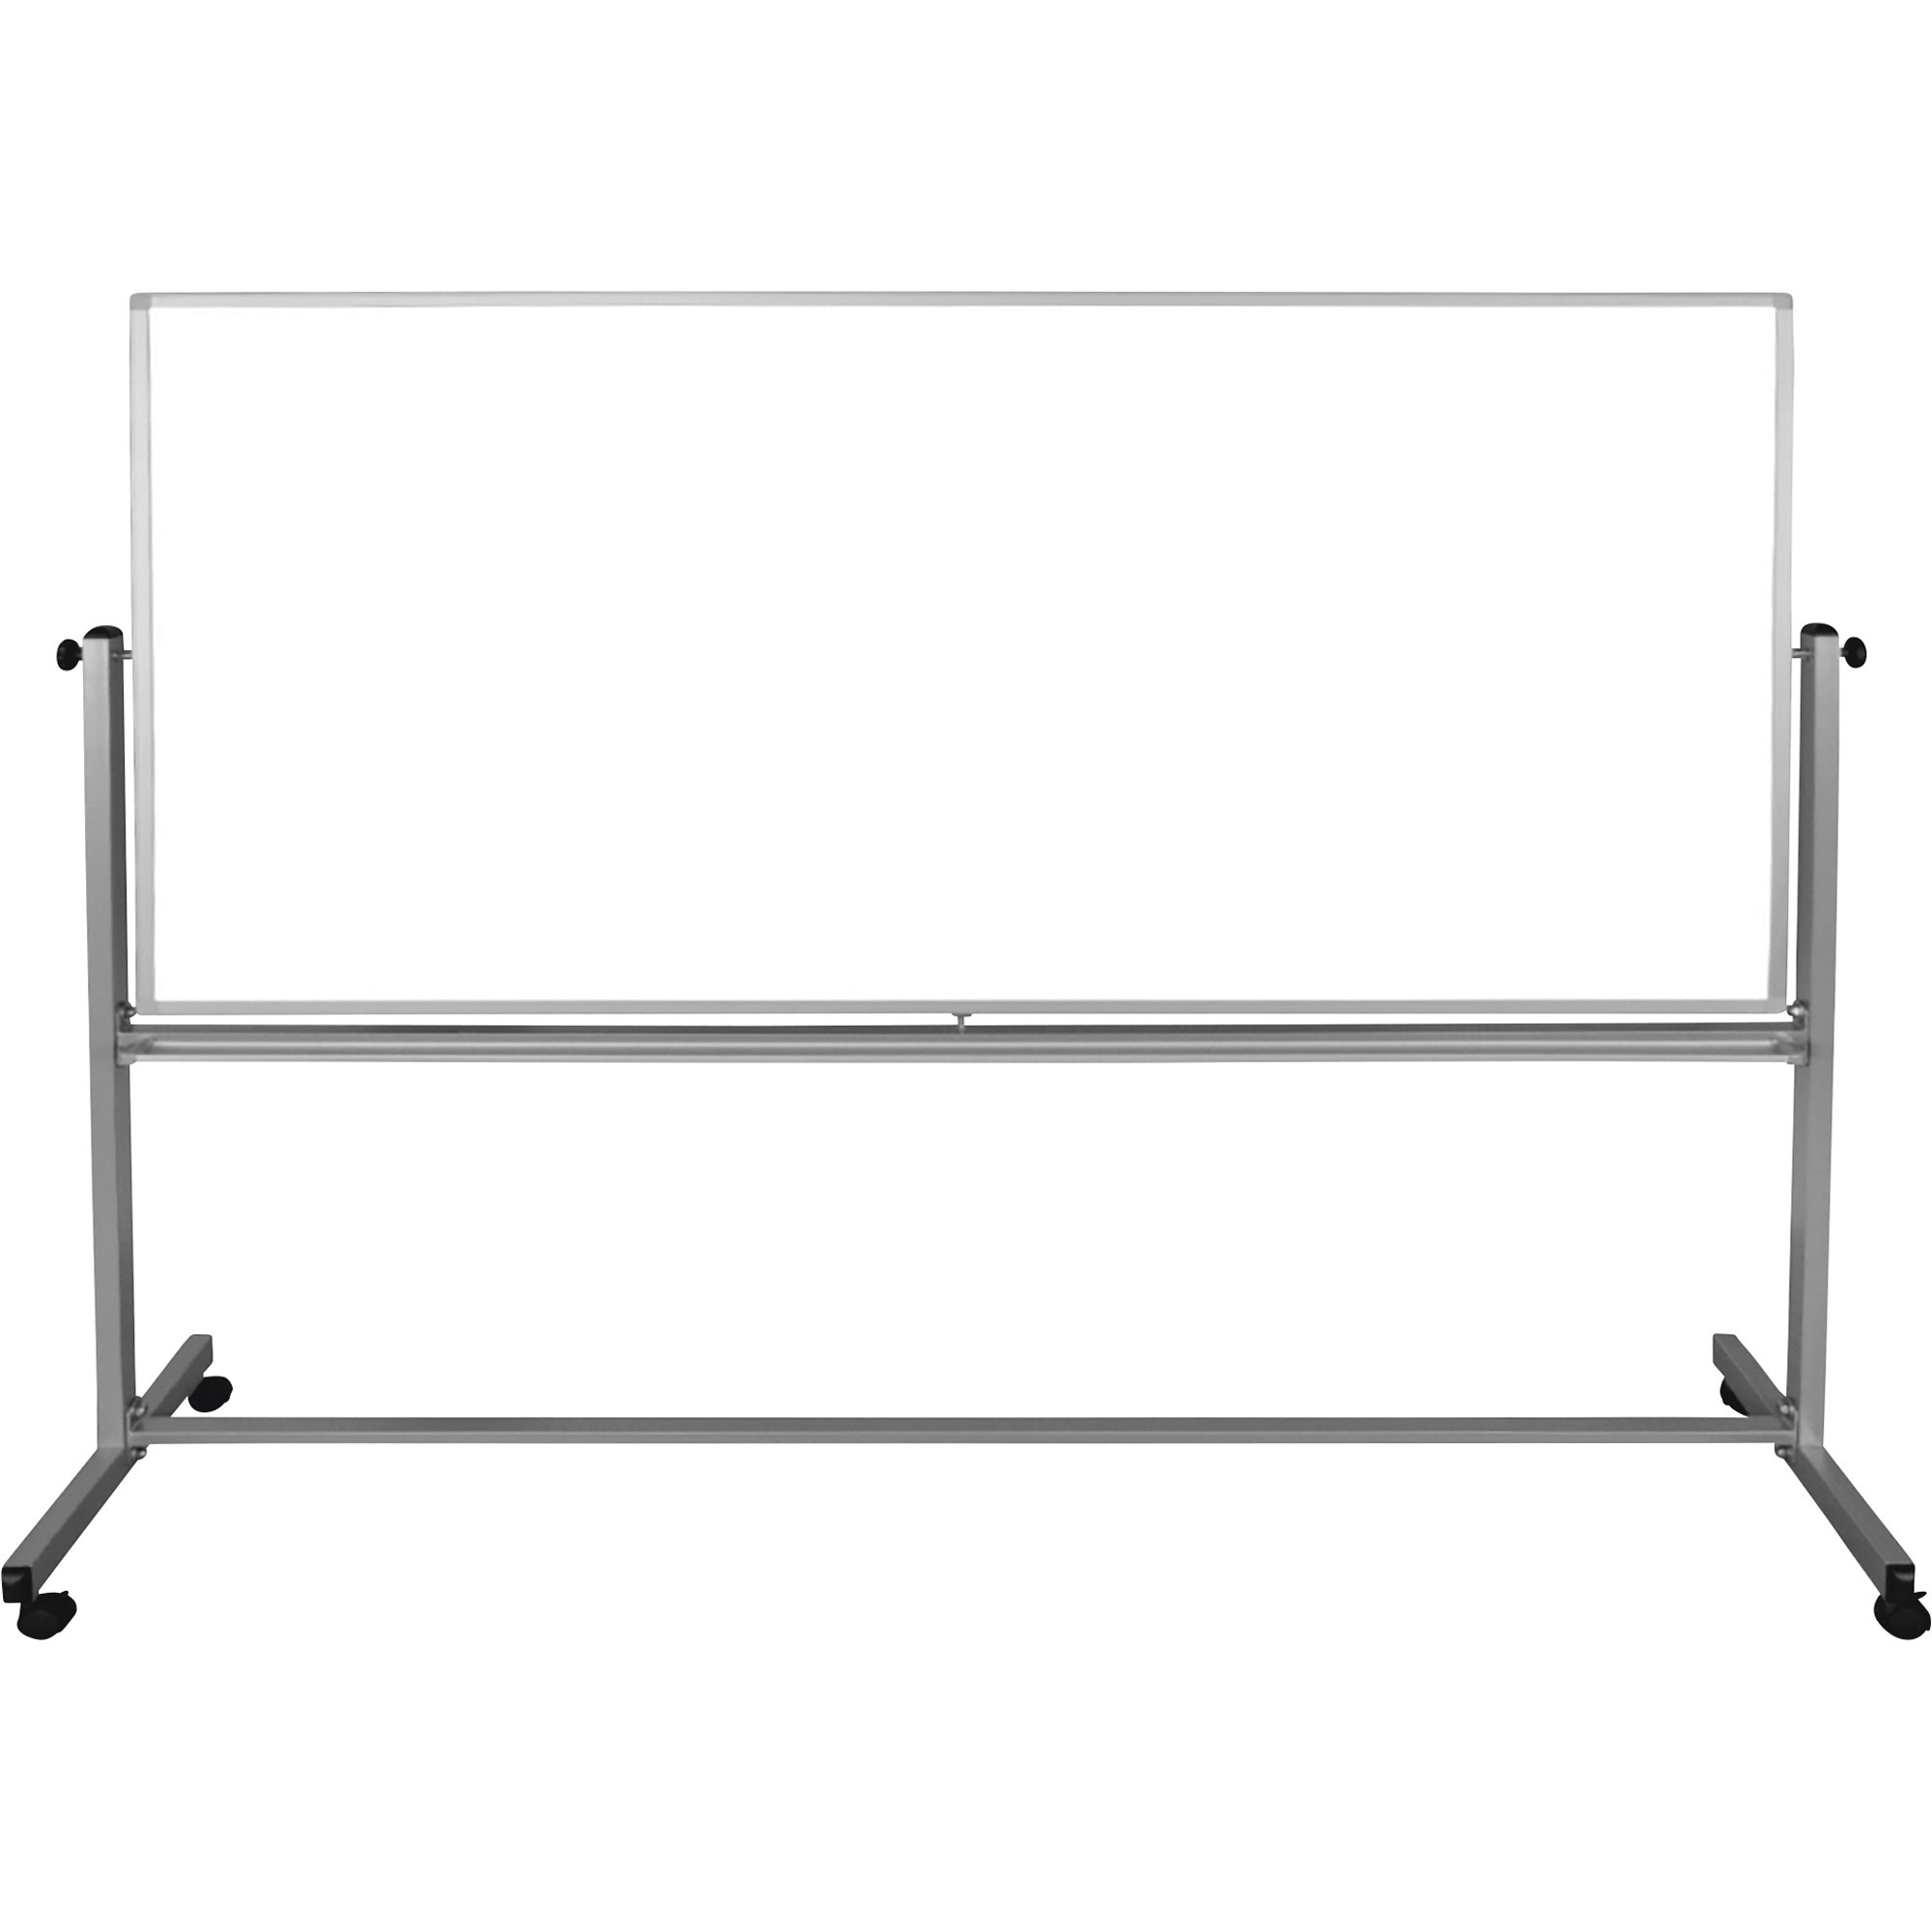 Luxor Double-Sided Whiteboard, Gray/White, 99Inch W x 23Inch D x 69Inch H, Model MB9640WW